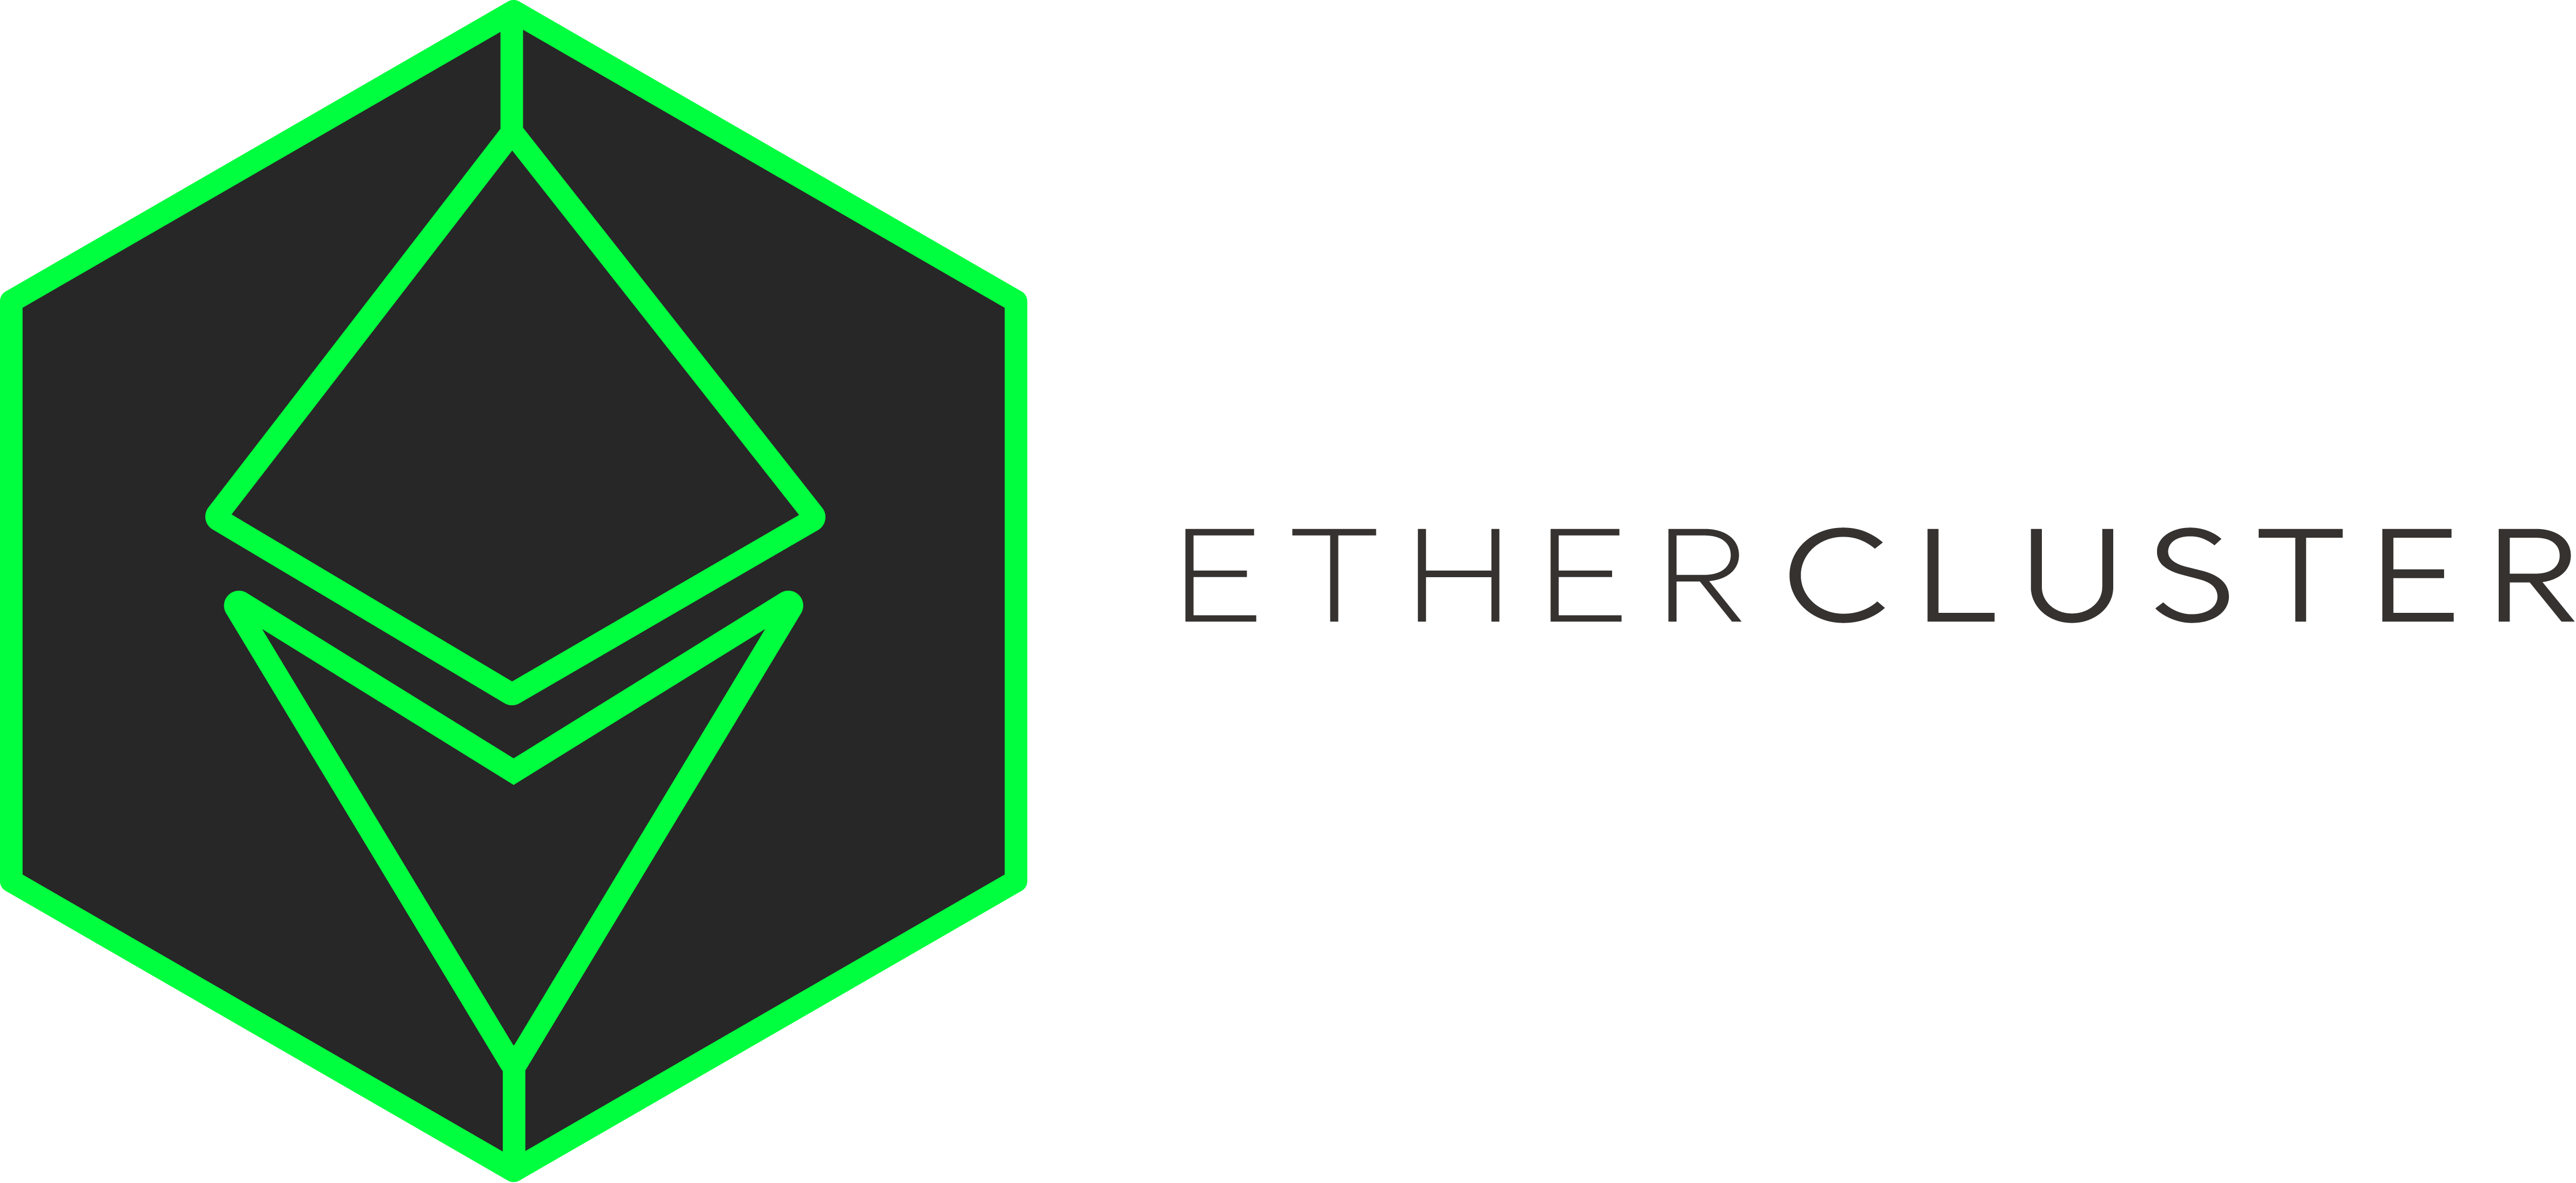 Ethercluster-logo